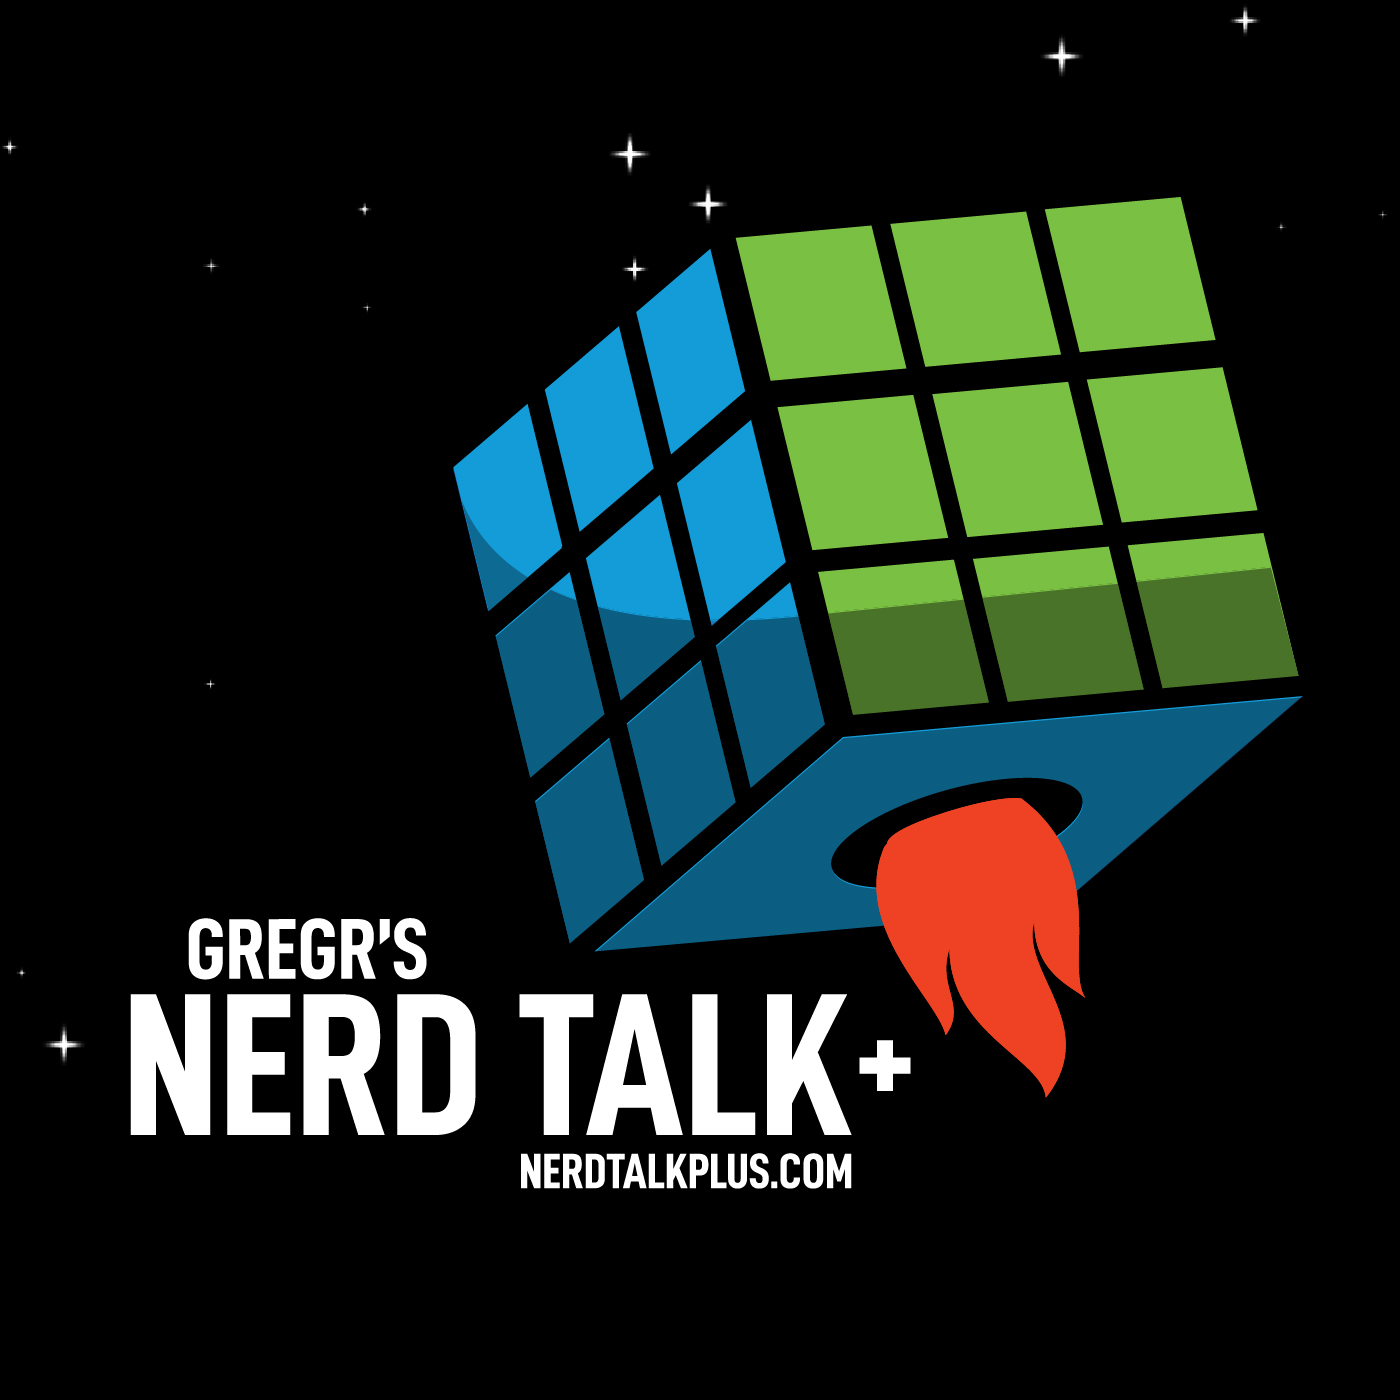 January 10, 2022 - Nerd Talk+